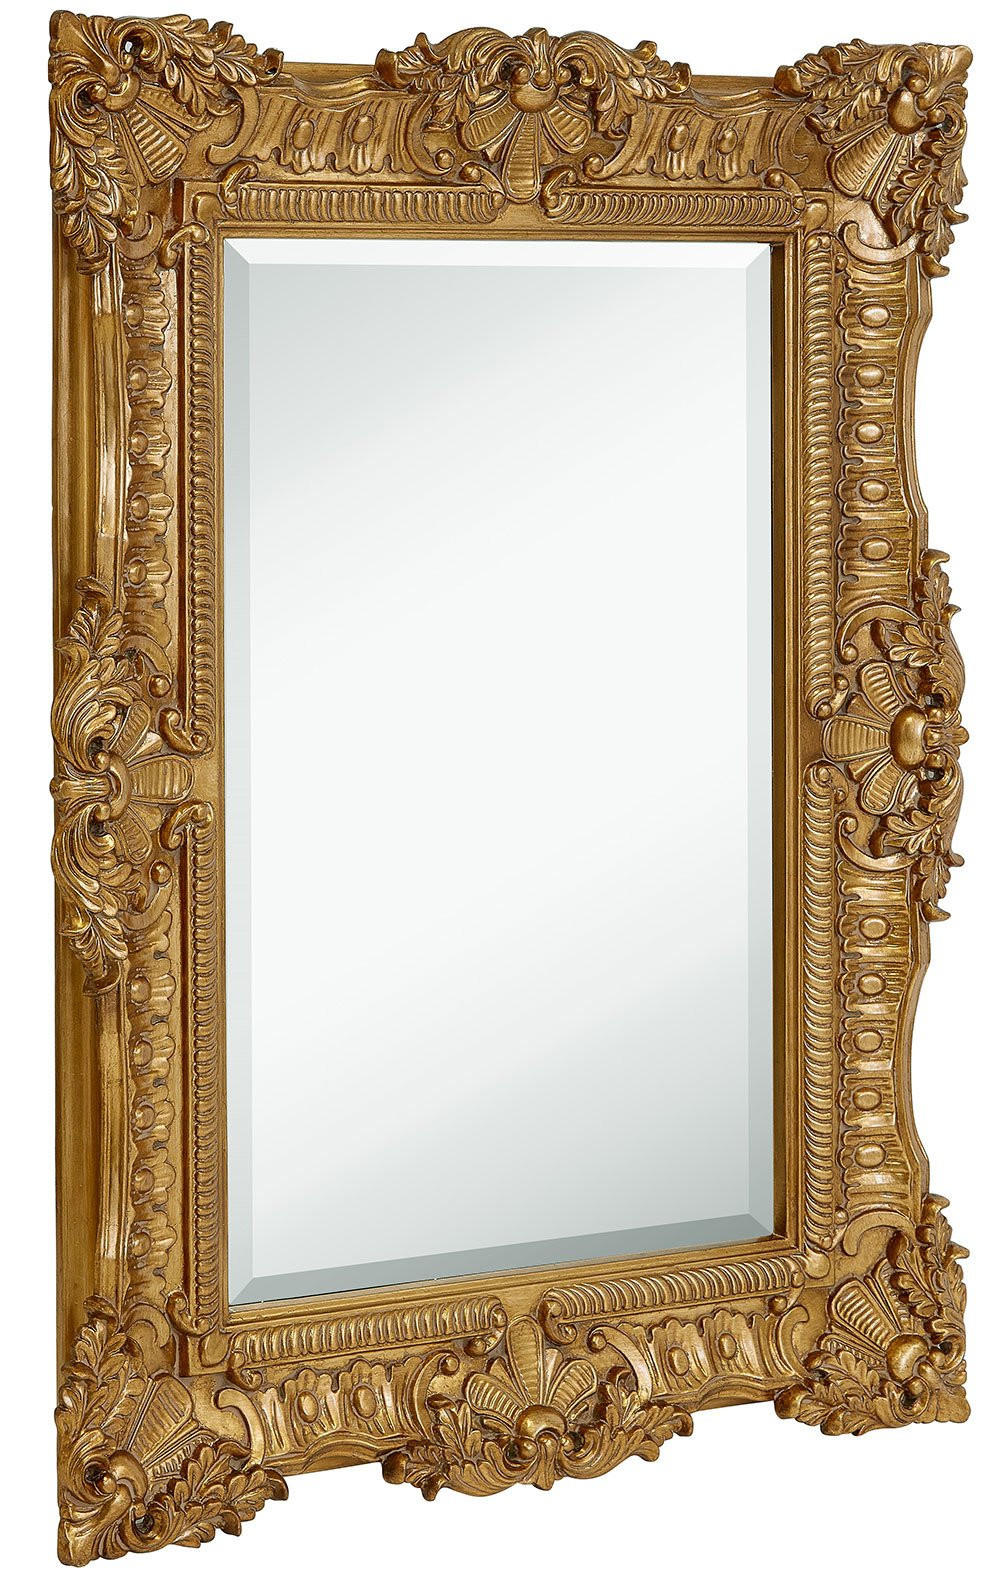 Gold Frame Bathroom Mirror
 Ornate Gold Baroque Frame Mirror